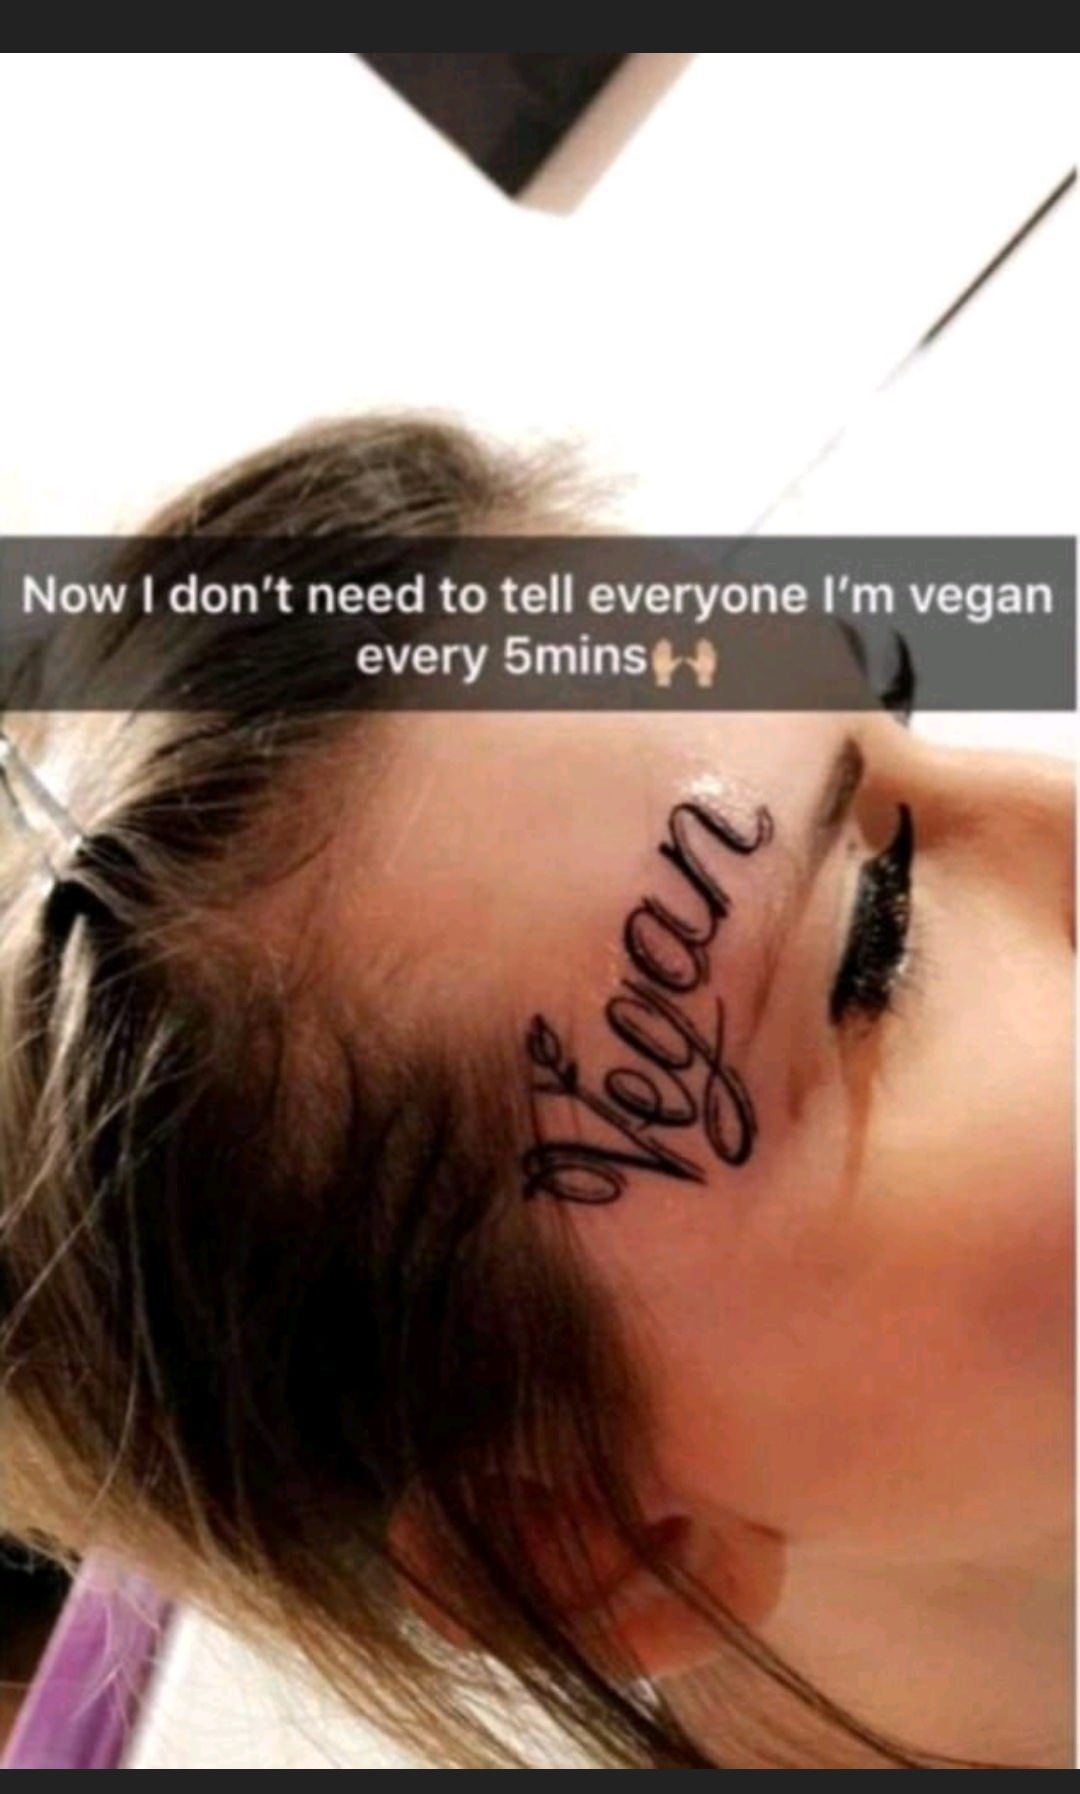 vegan tattoo meme - Now I don't need to tell everyone I'm vegan every 5mins